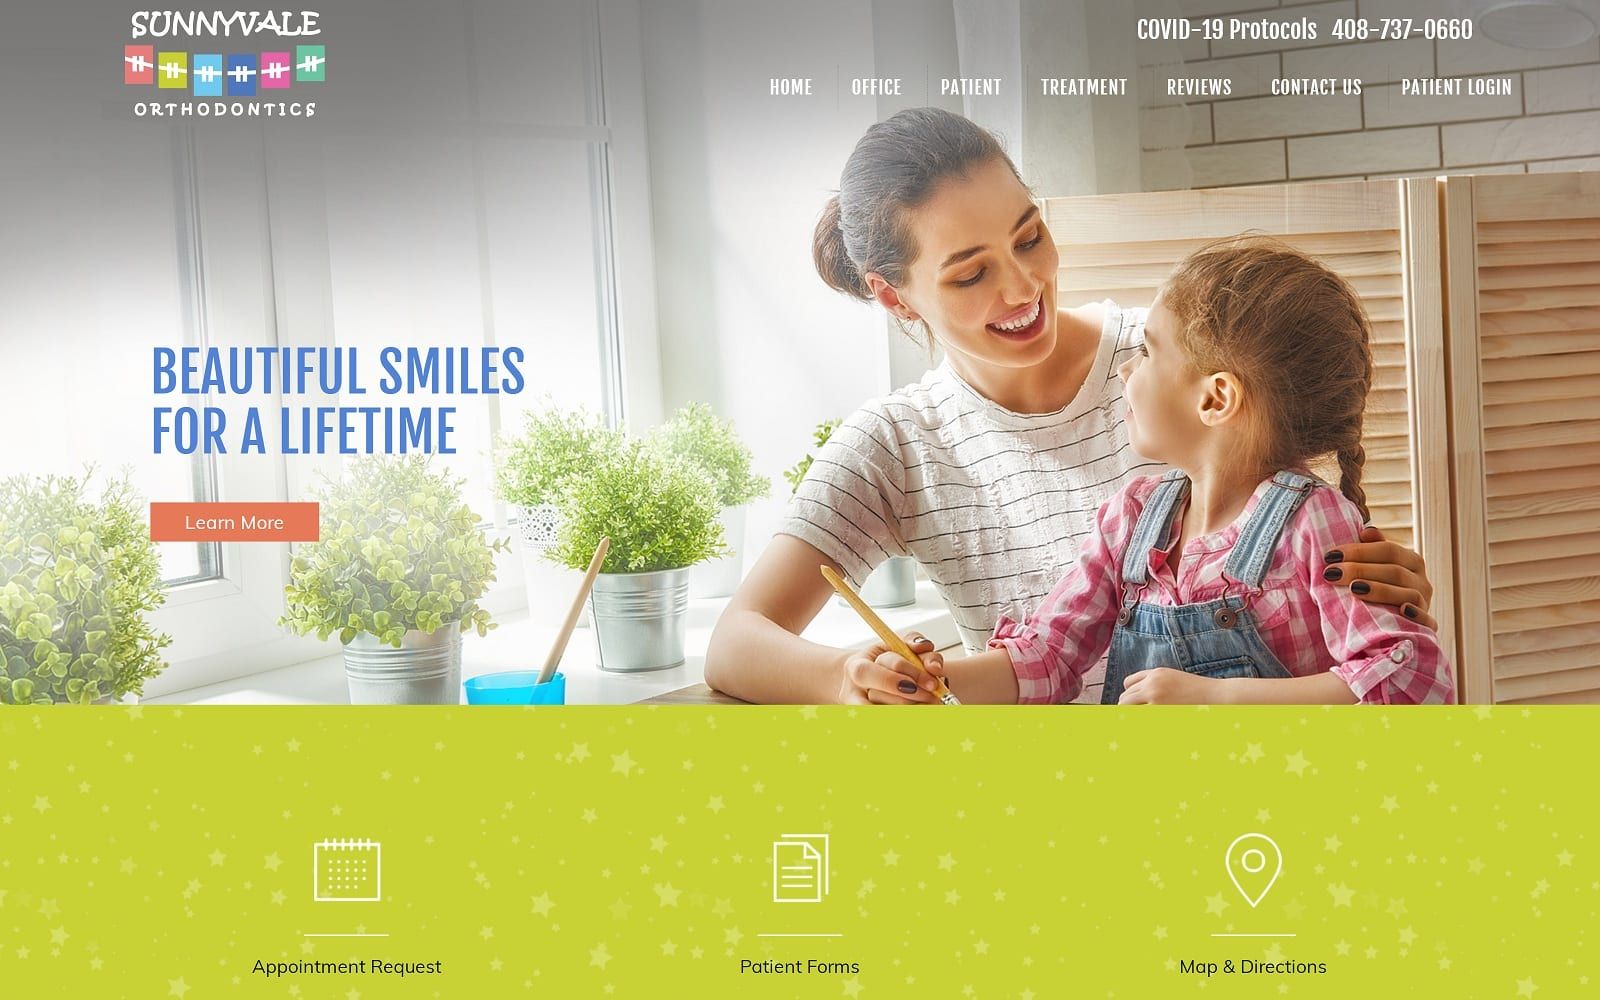 The screenshot of sunnyvale orthodontics sunnyvaleorthodontics. Com website